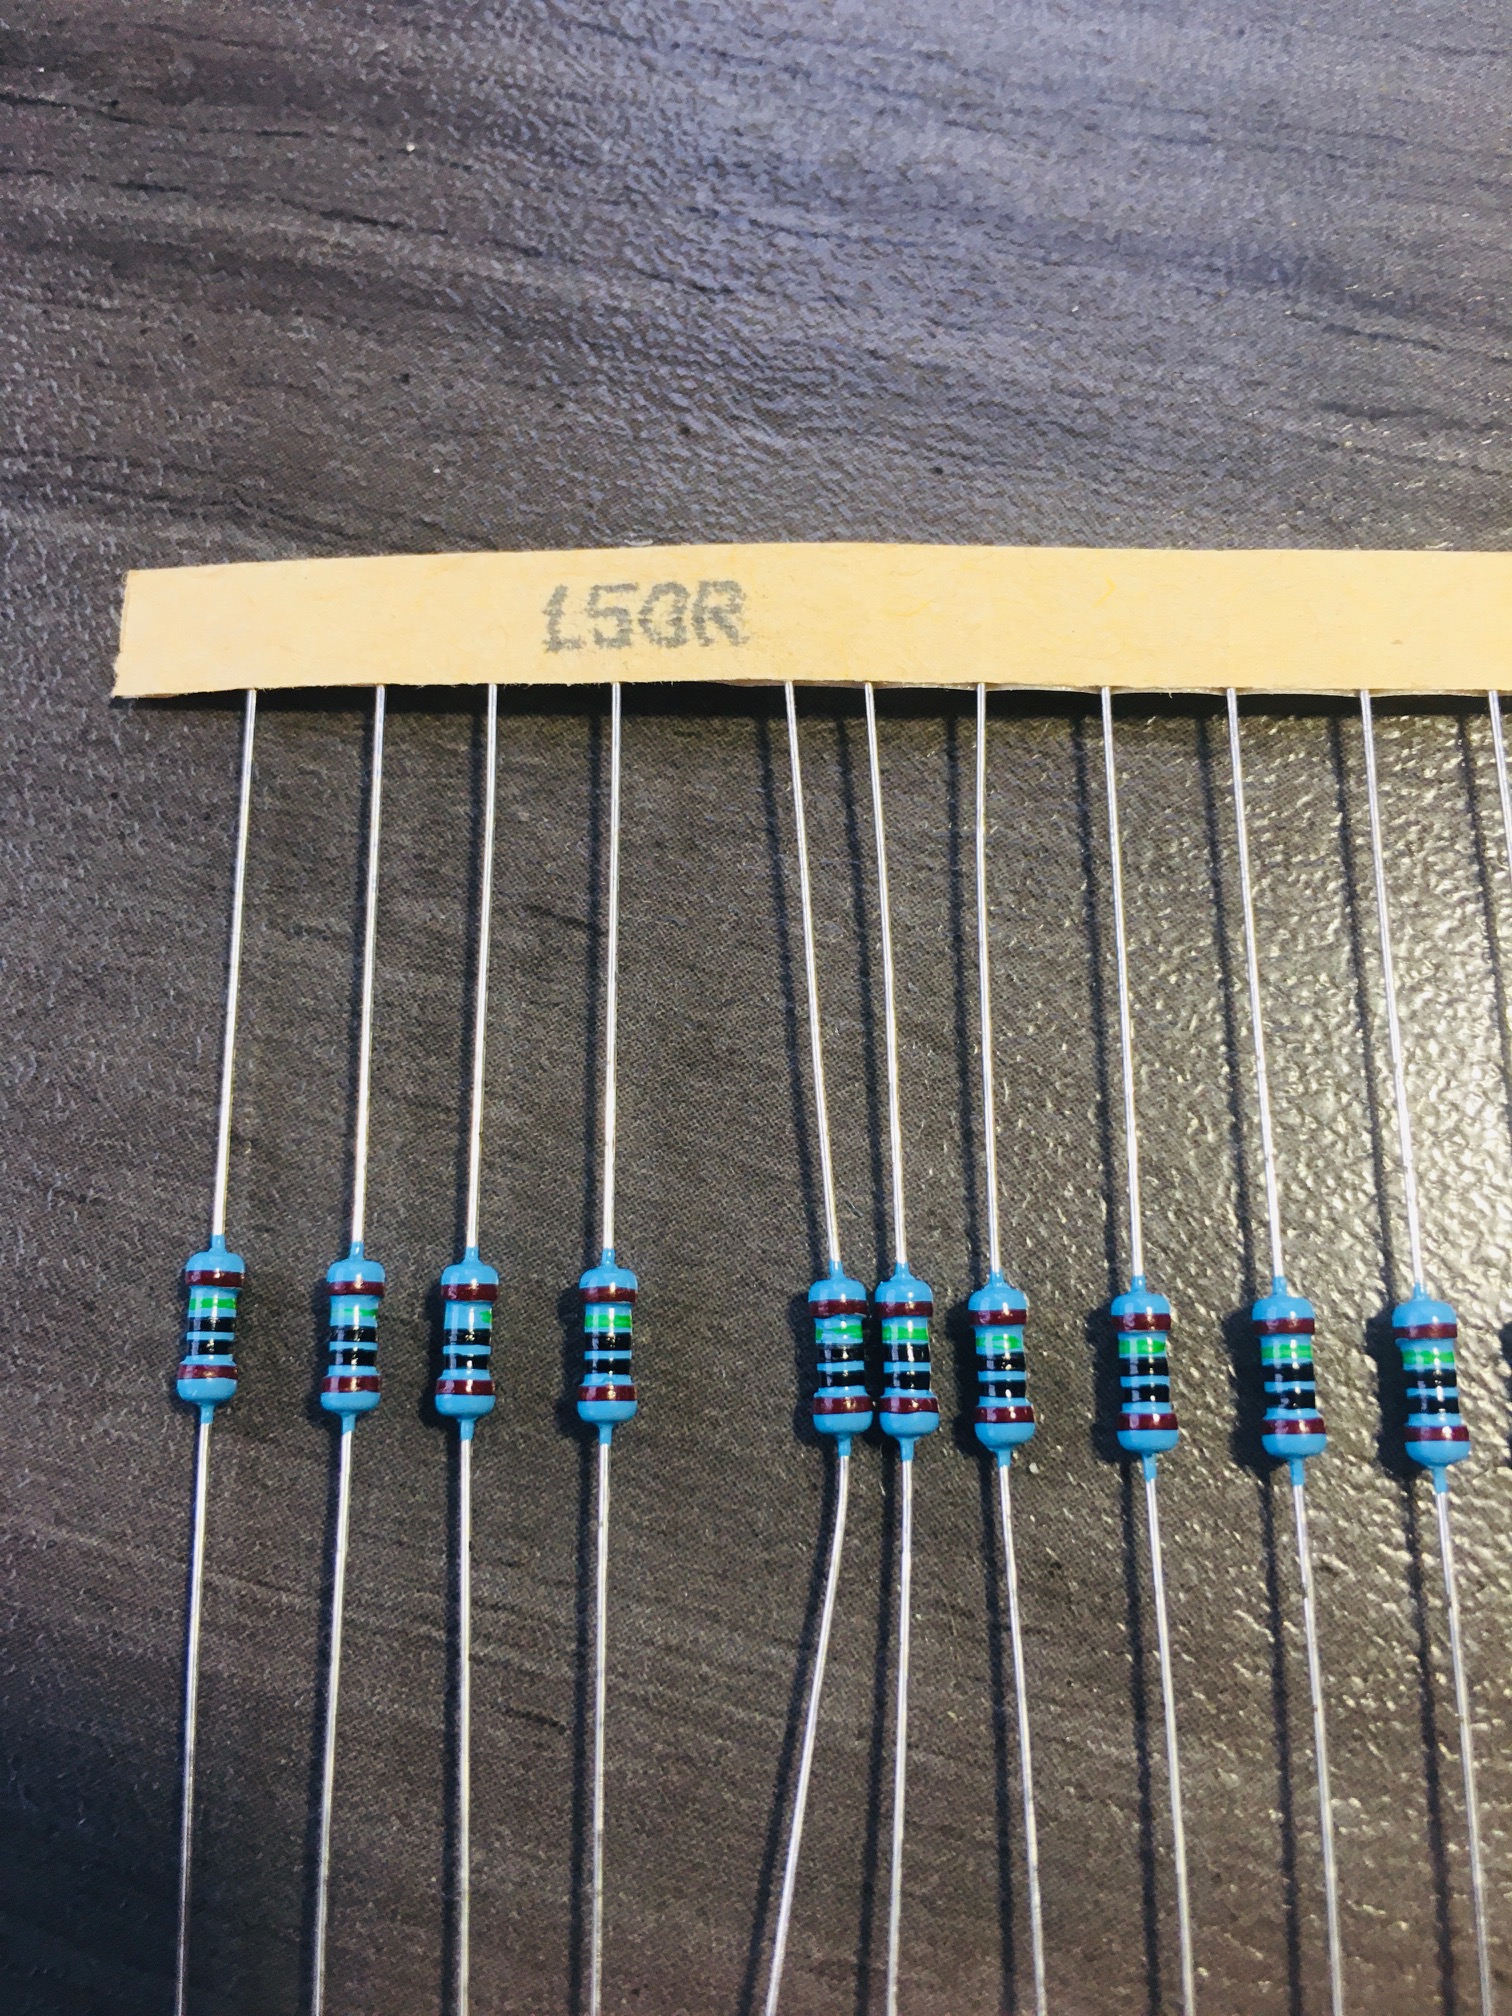 These are very small 1/8 watt Resistors